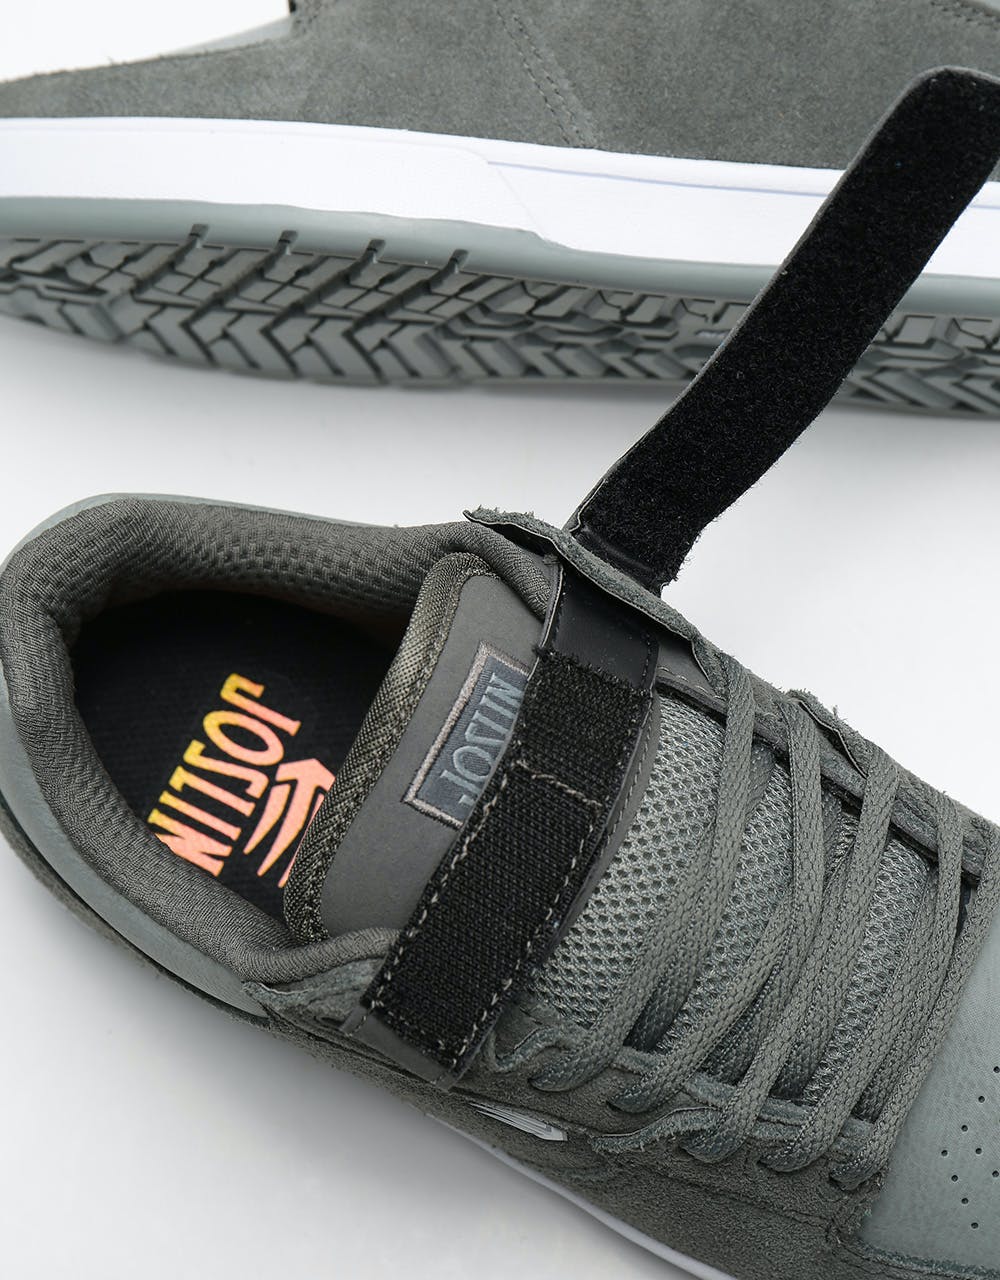 Etnies x Michelin Joslin 2 Skate Shoes - Grey/Light Grey